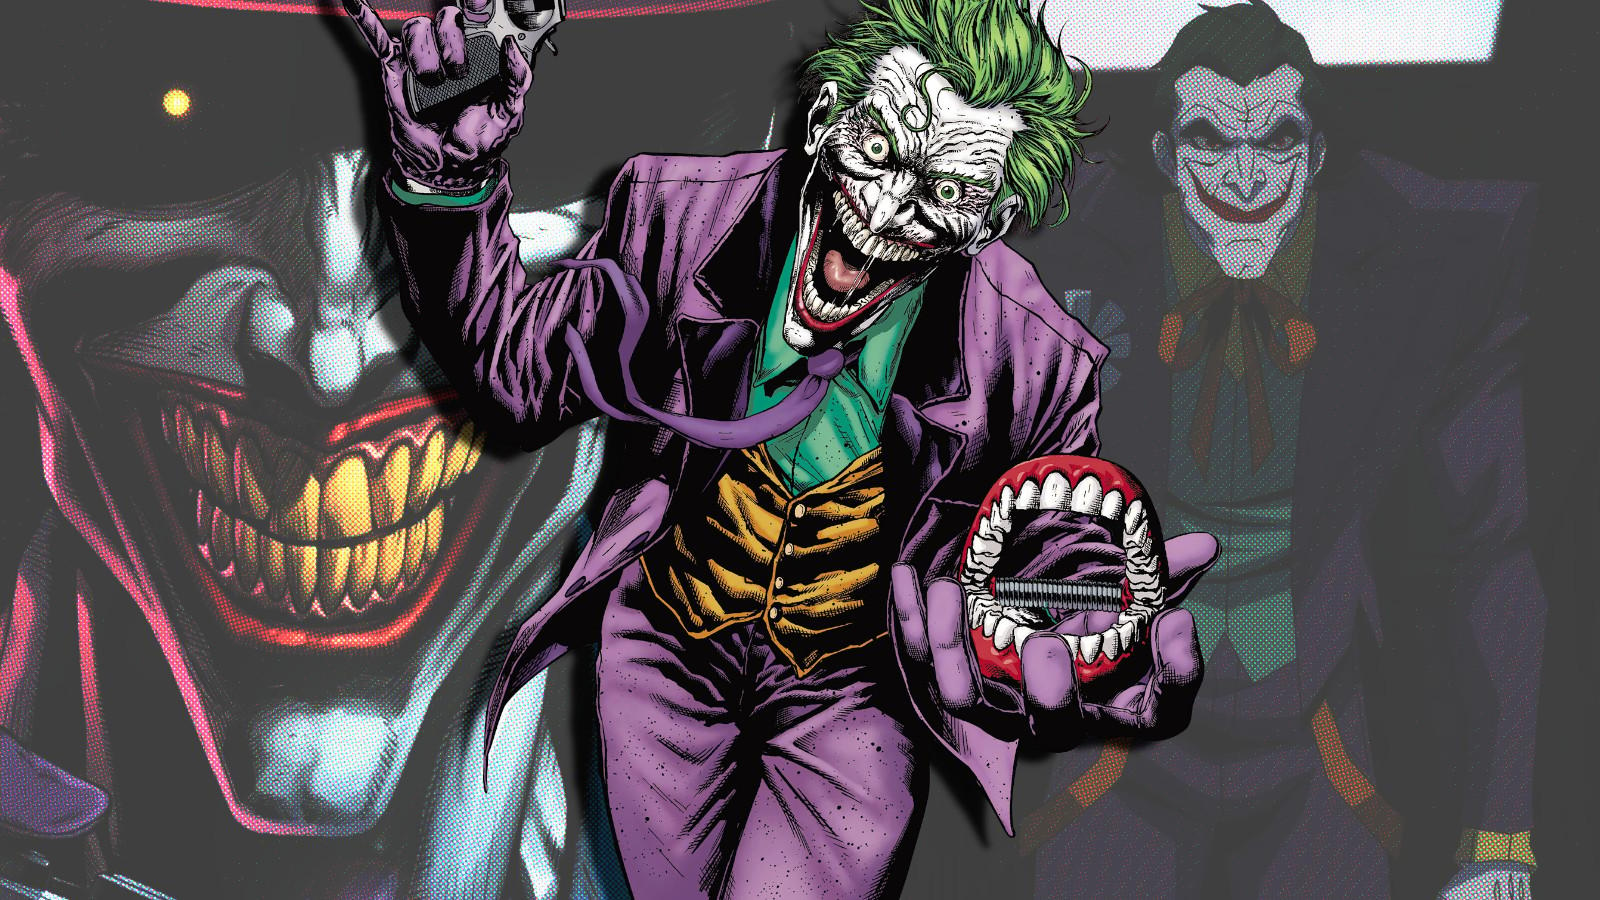 The Joker's various depictions